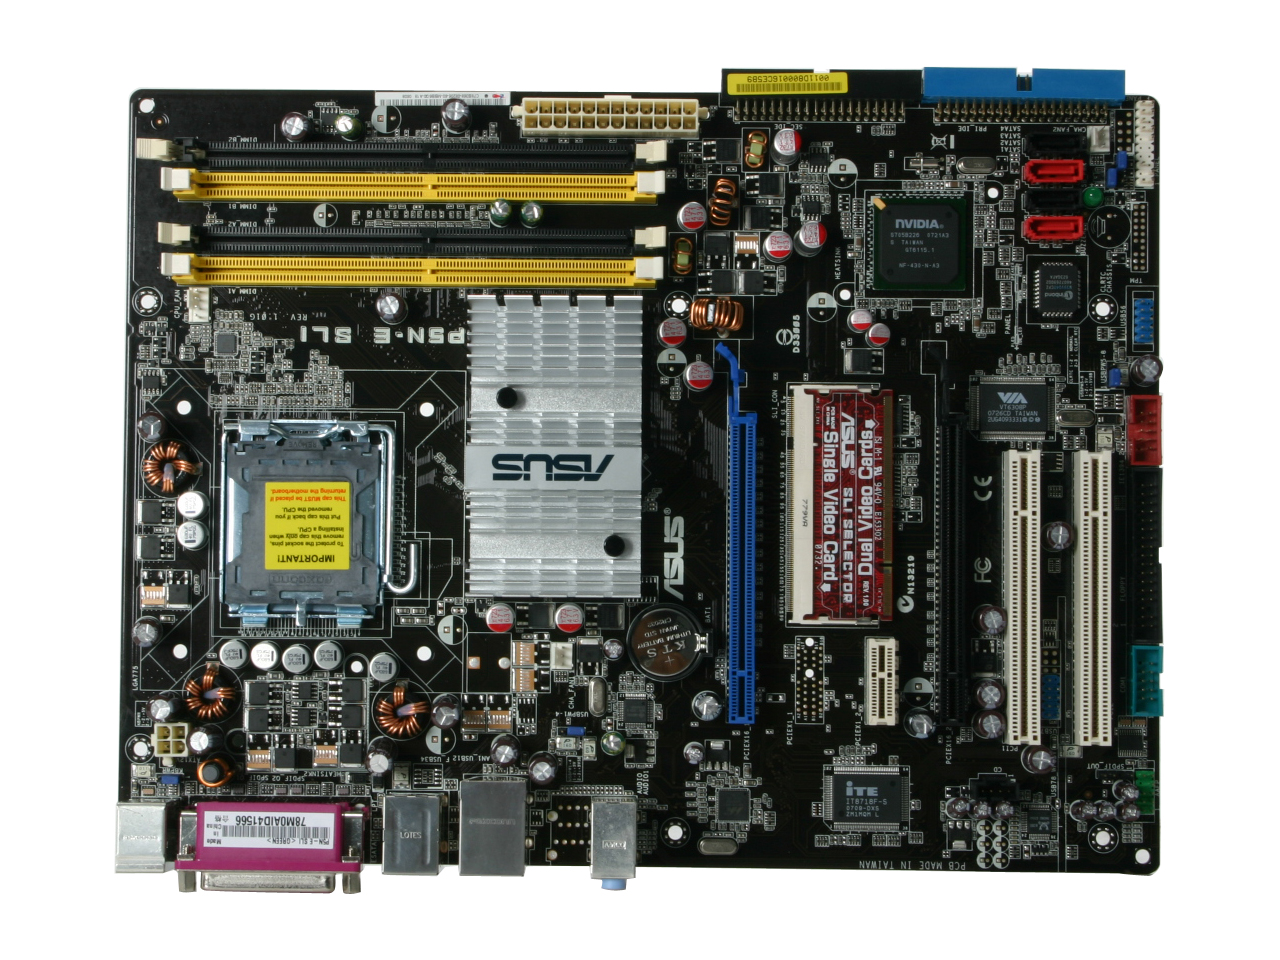 ASUS P5N E SLI LGA 775 NVIDIA nForce 650i SLI ATX Intel Motherboard